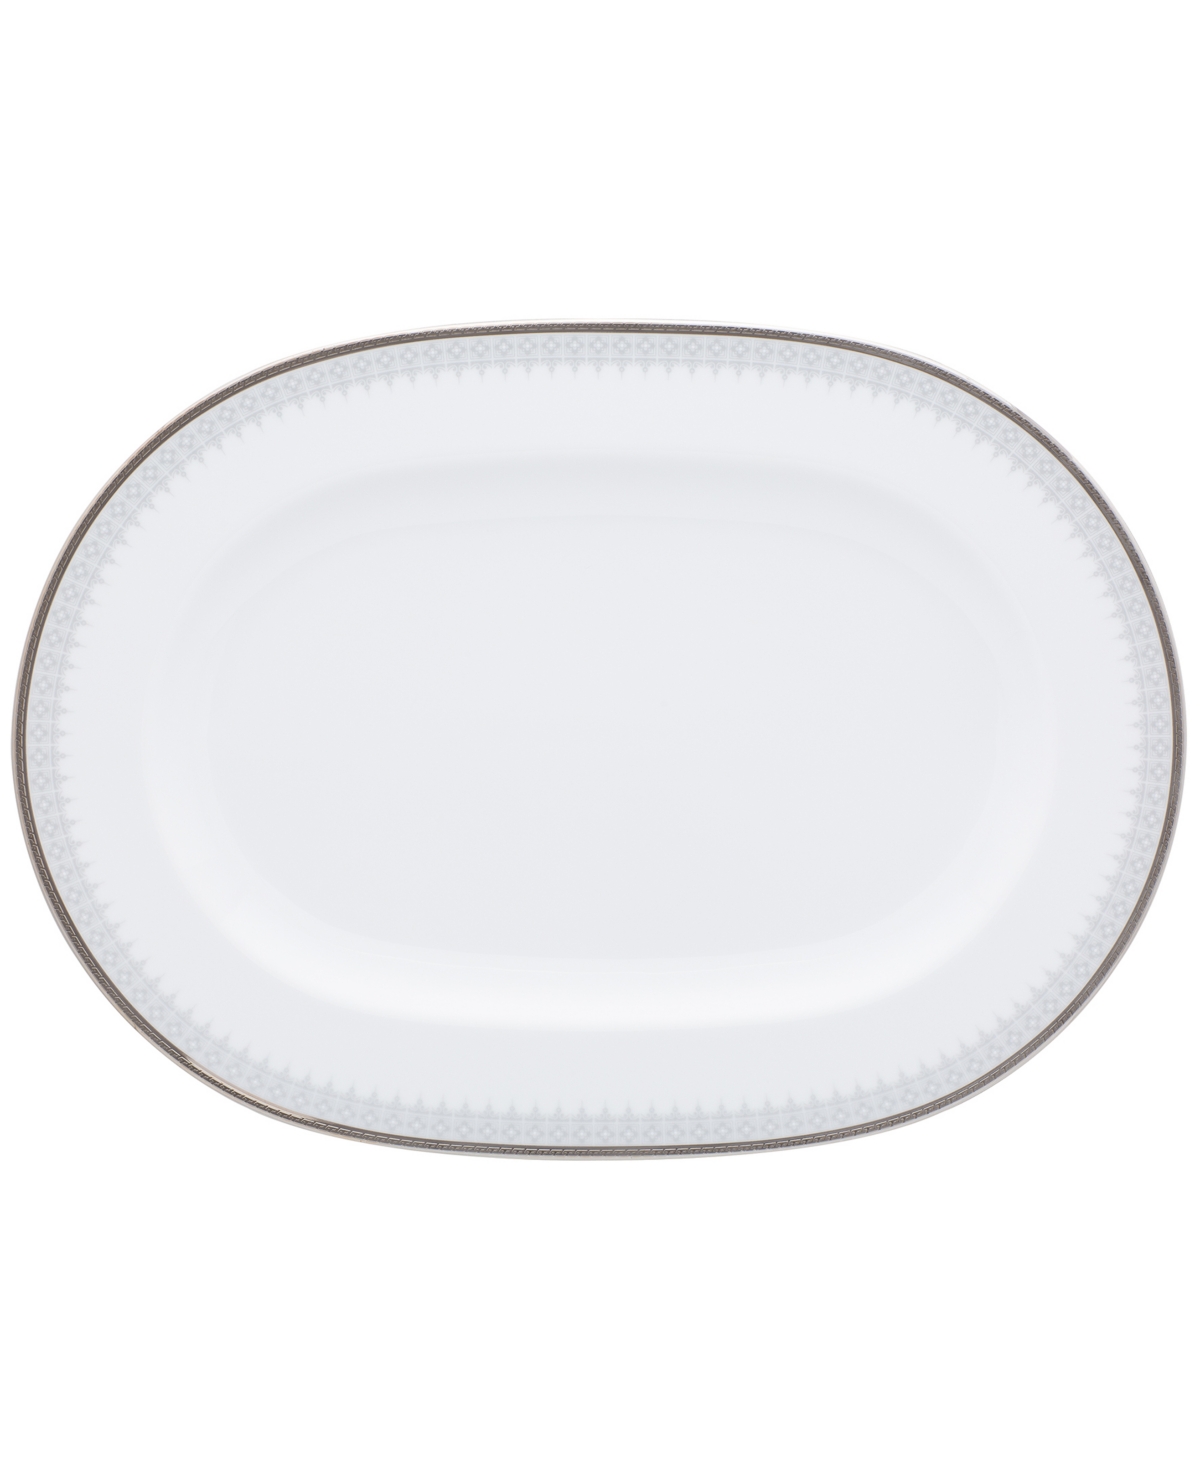 Noritake Silver Colonnade Oval Platter, 16" In White